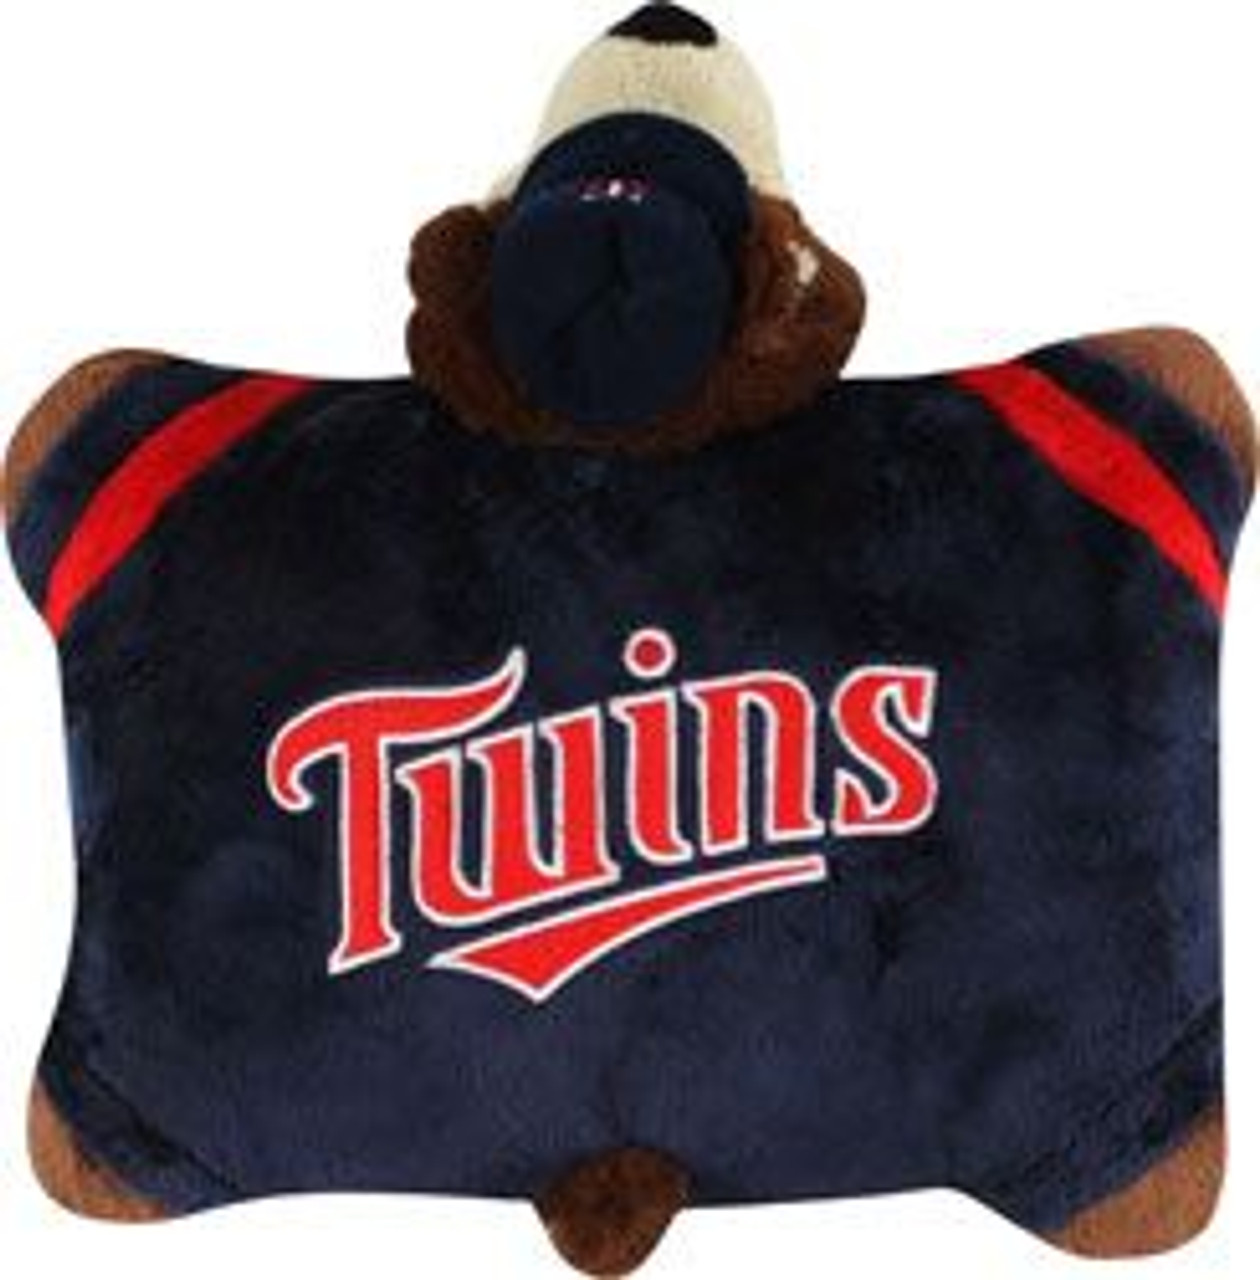 Minnesota Twins Pillow Pet